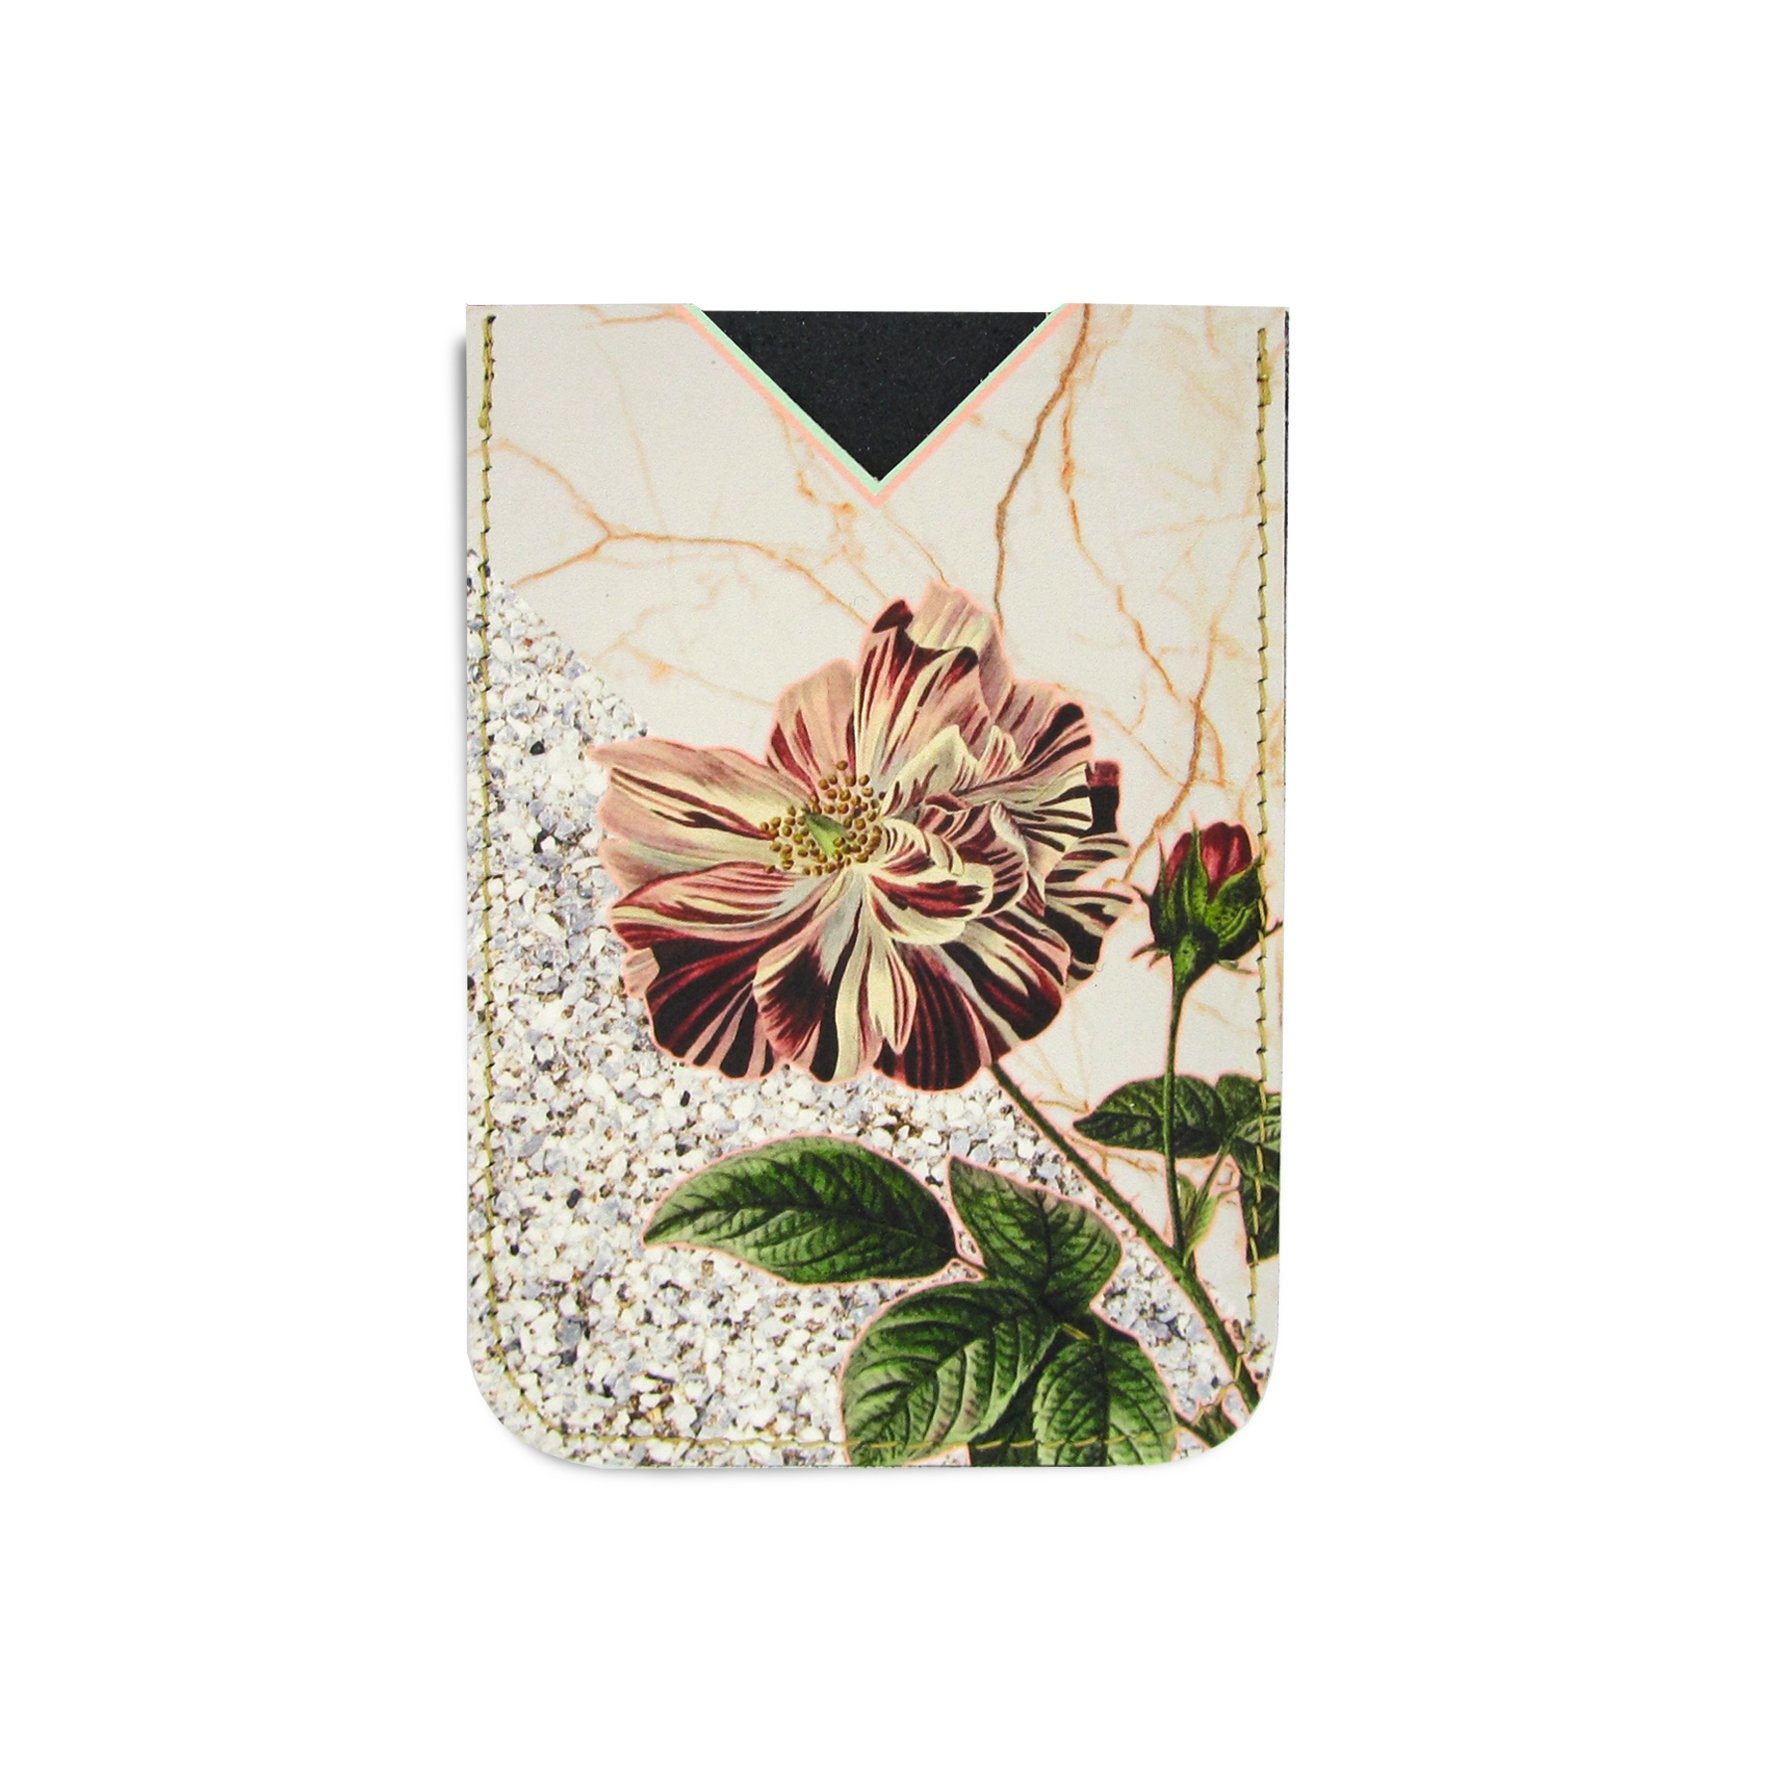 Leather Card Holder / Phone Sticker Wallet Pocket – Wild Rose – Standard Card Holder / Without personalisation / Pink